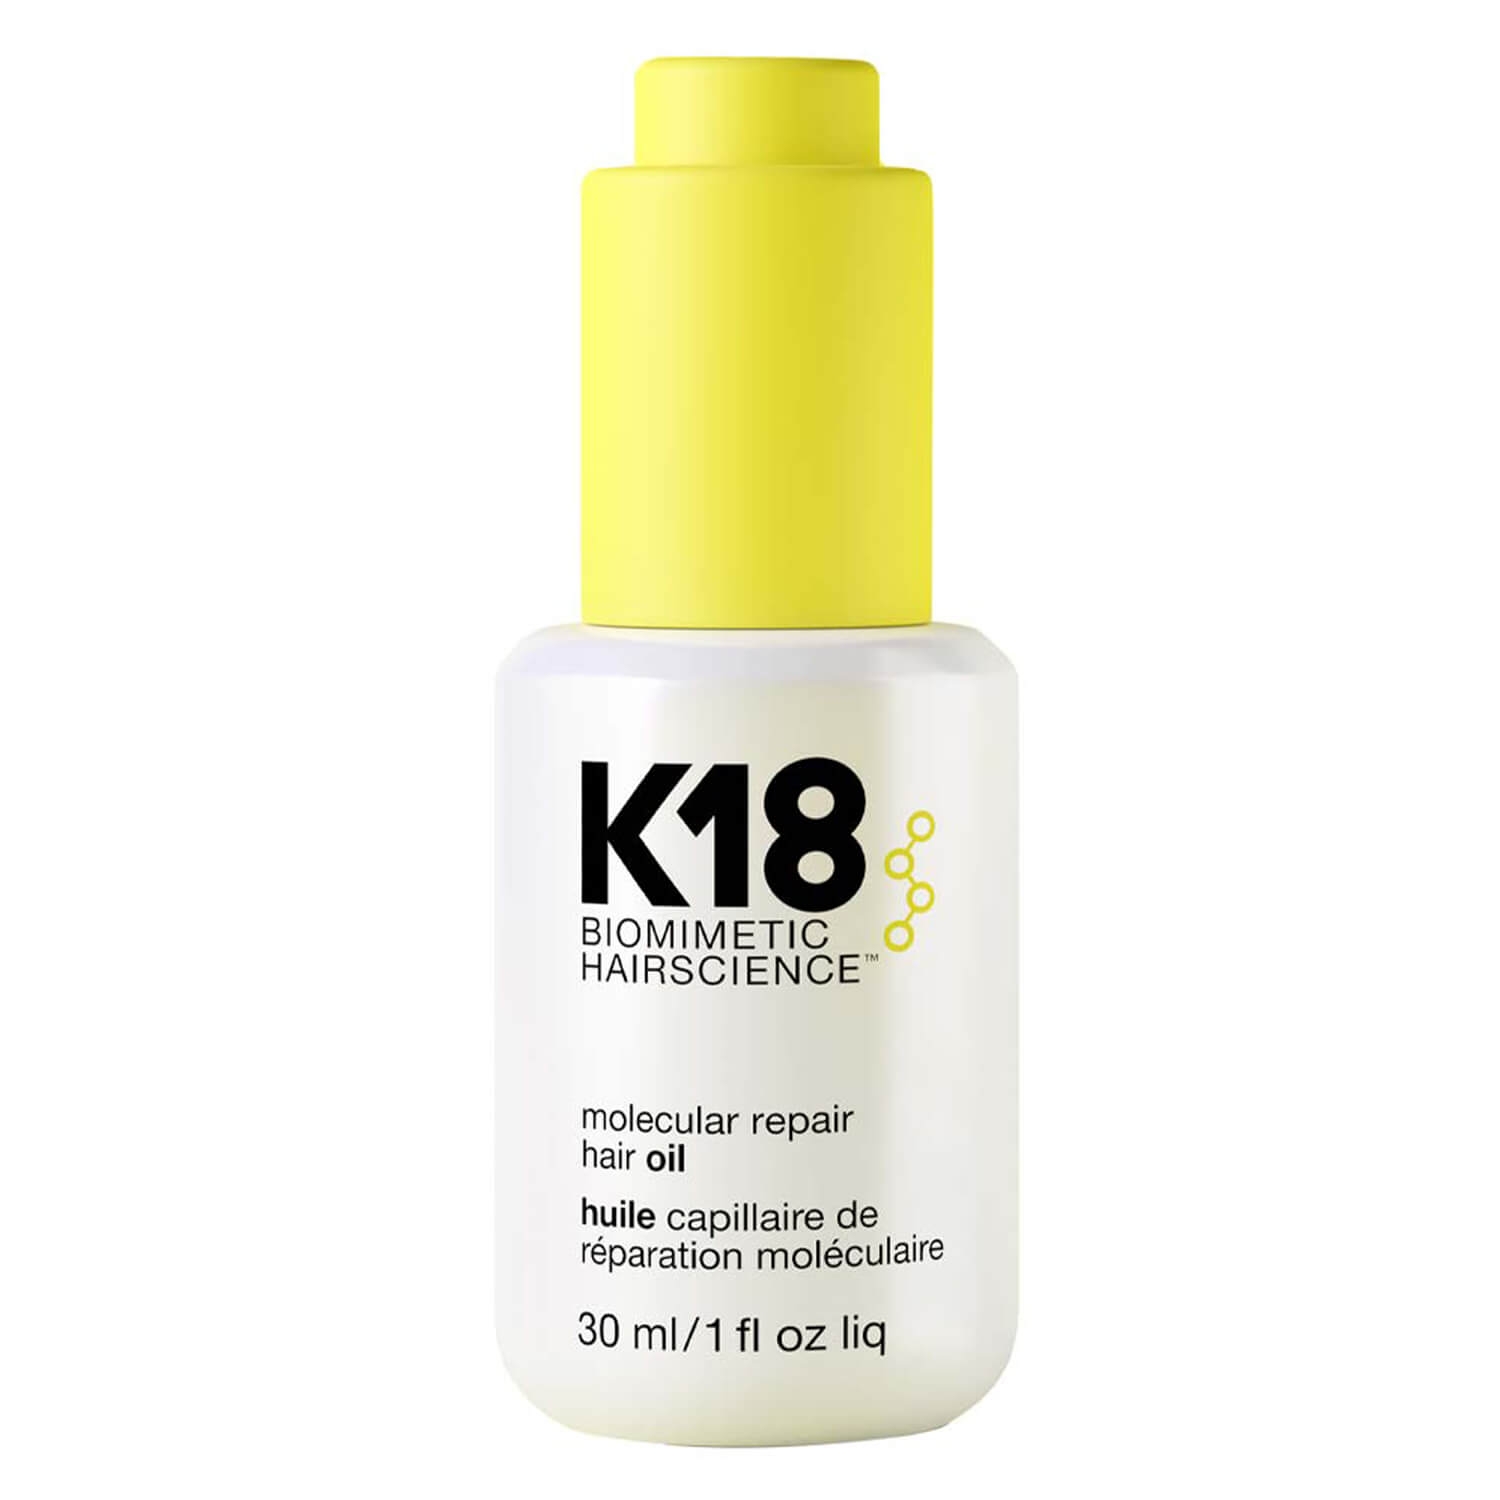 Produktbild von K18 Biomimetic Hairscience - molecular repair hair oil